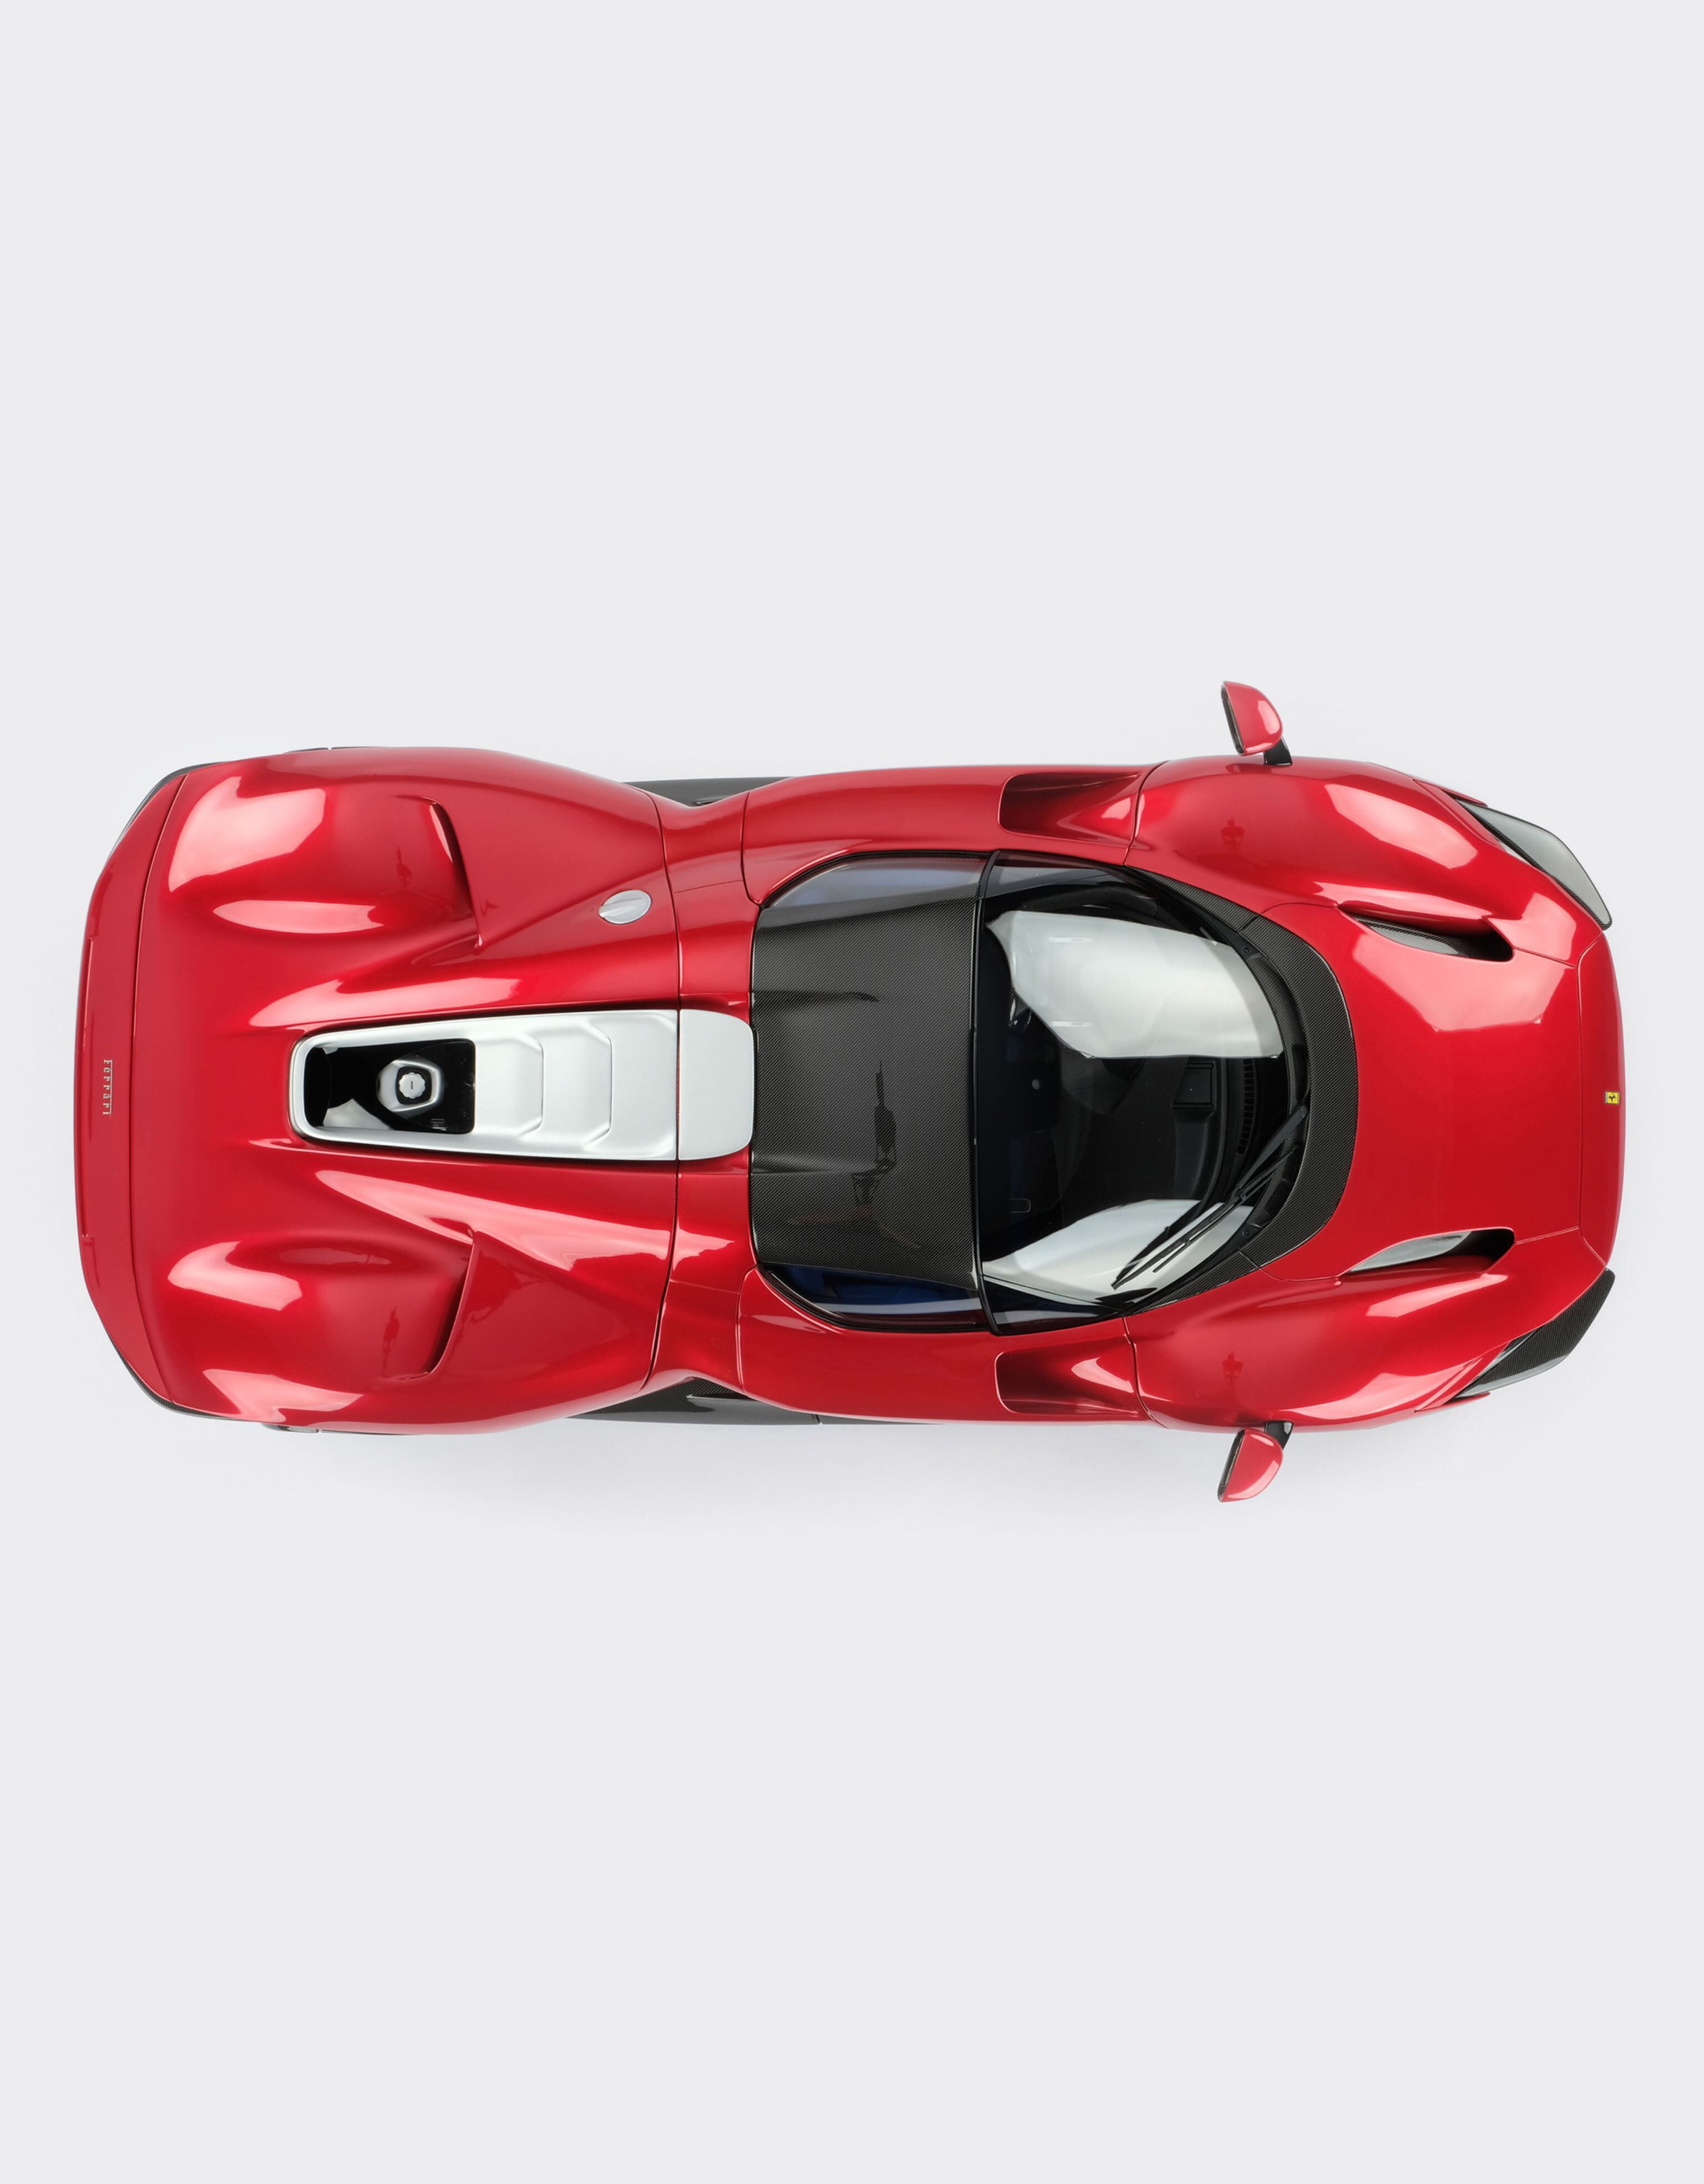 Ferrari Ferrari Daytona SP3 1:8 scale model Red F0664f